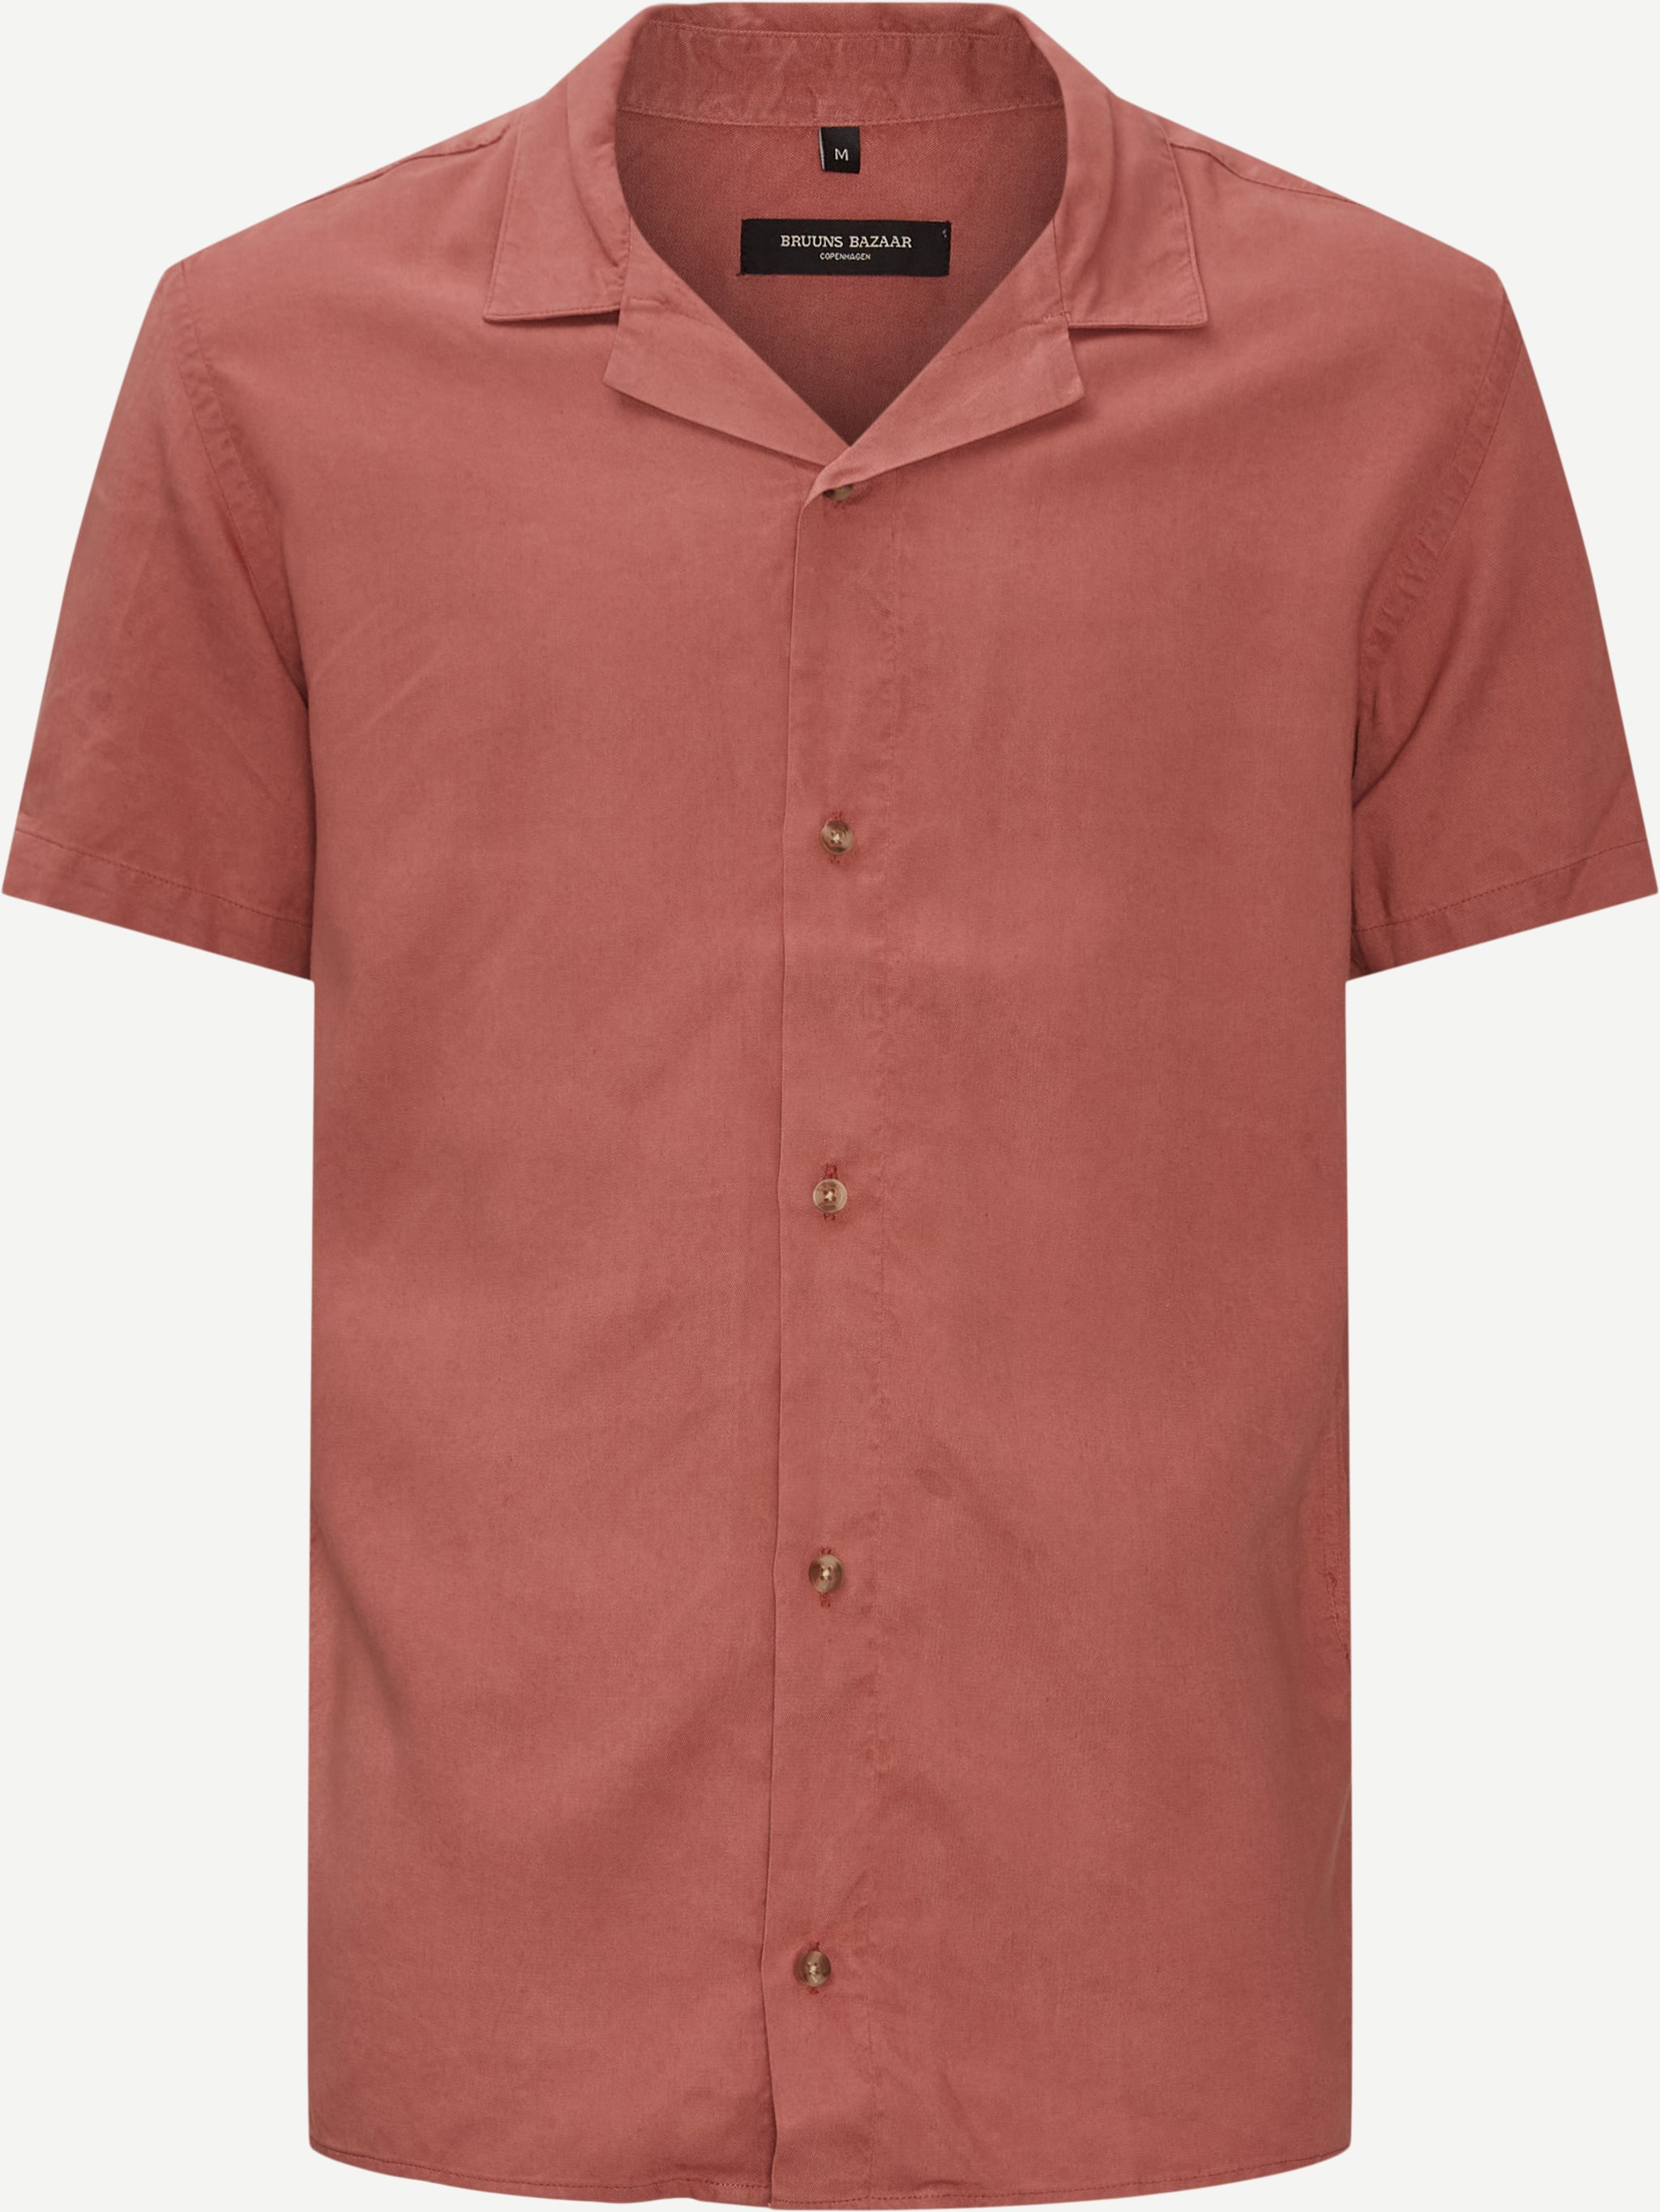 Shirts - Regular fit - Red